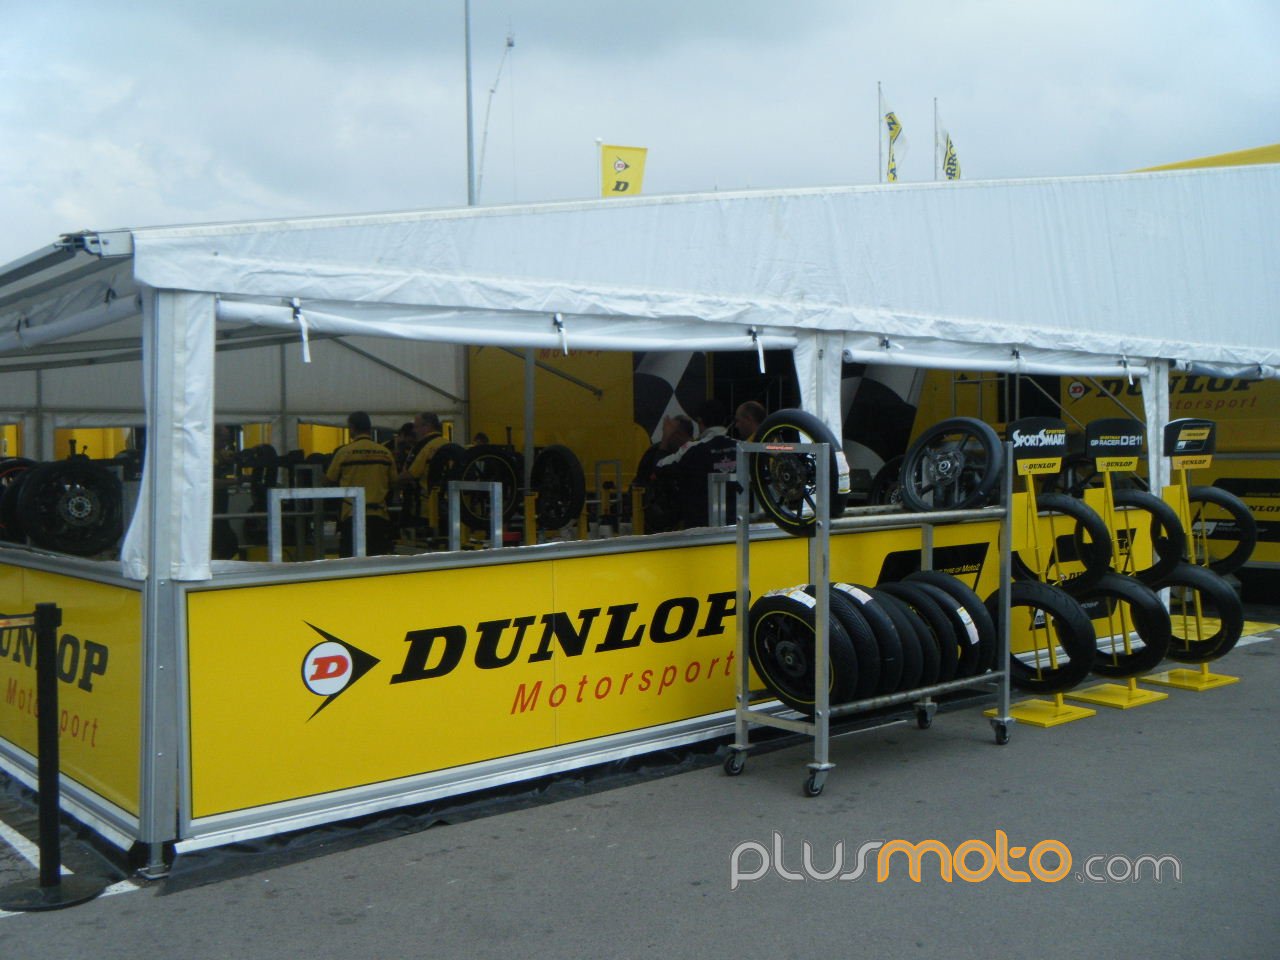 Paddock Catalunya 2011 Dunlop